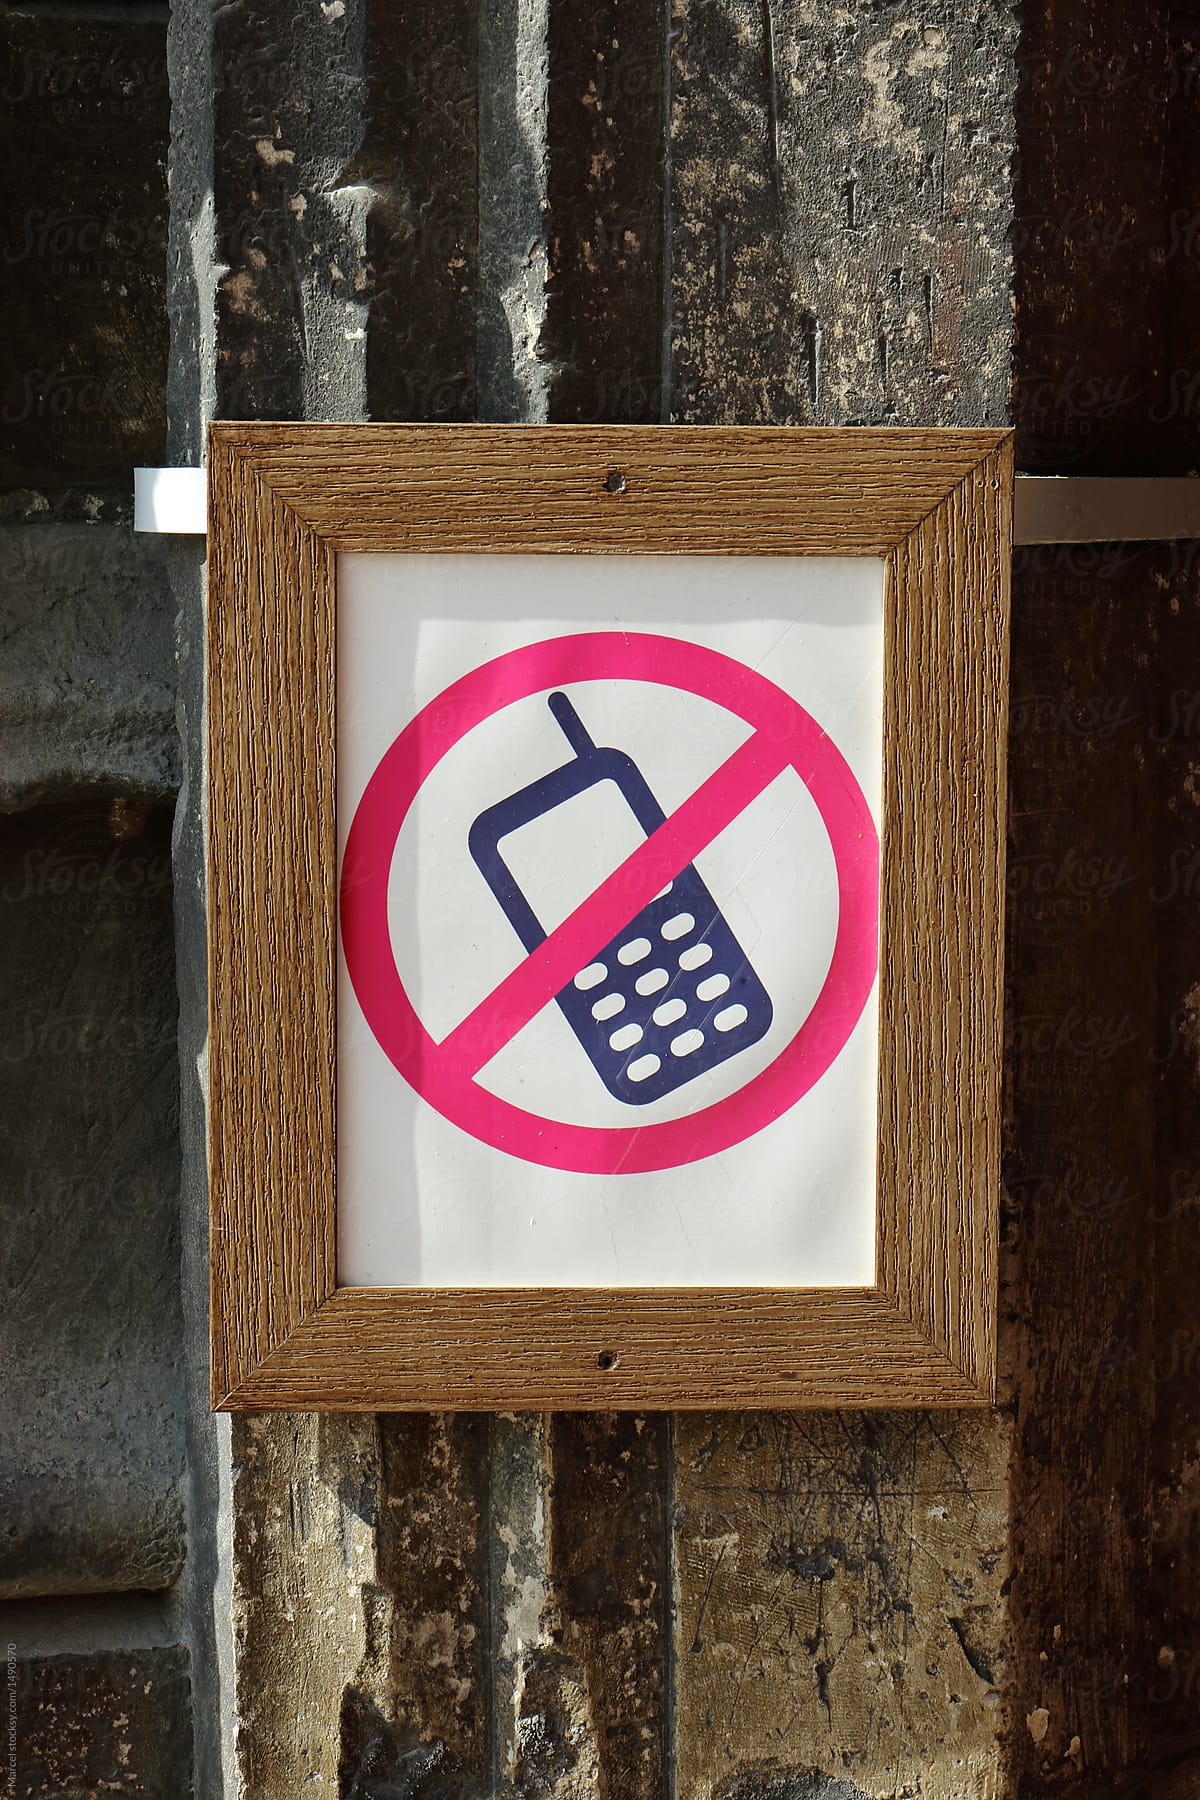 Phone forbidden sign